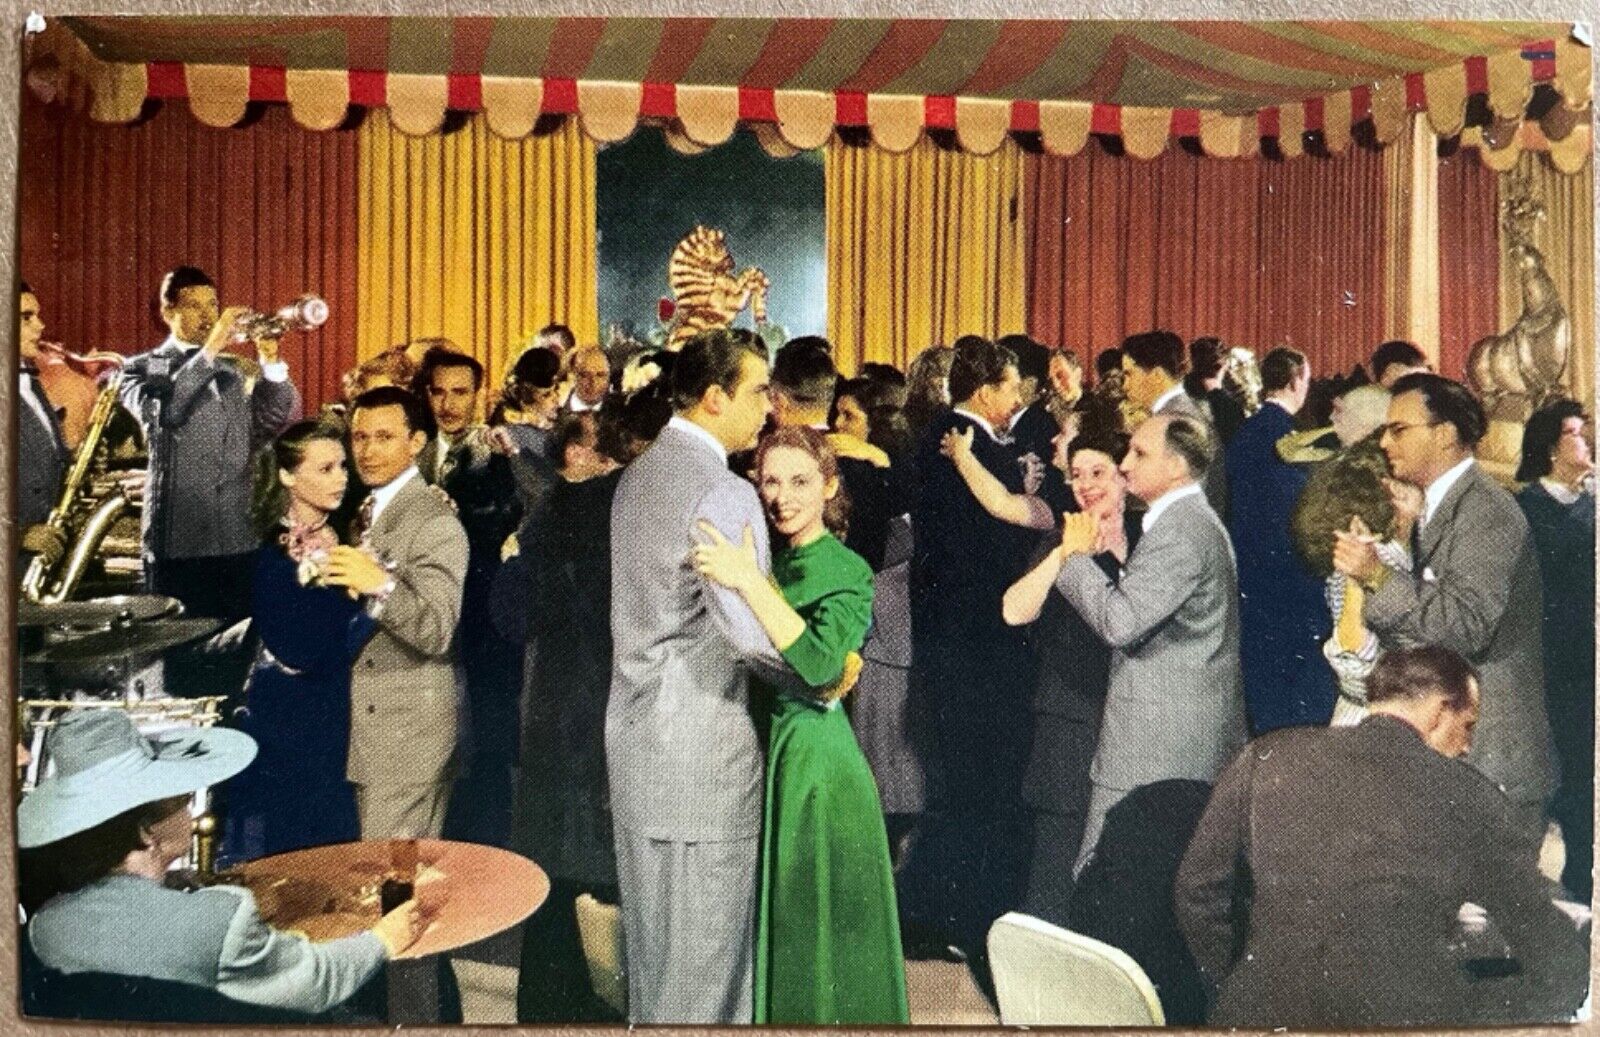 San Francisco Fairmont Hotel People Dancing Cirque Room California Postcard 1950